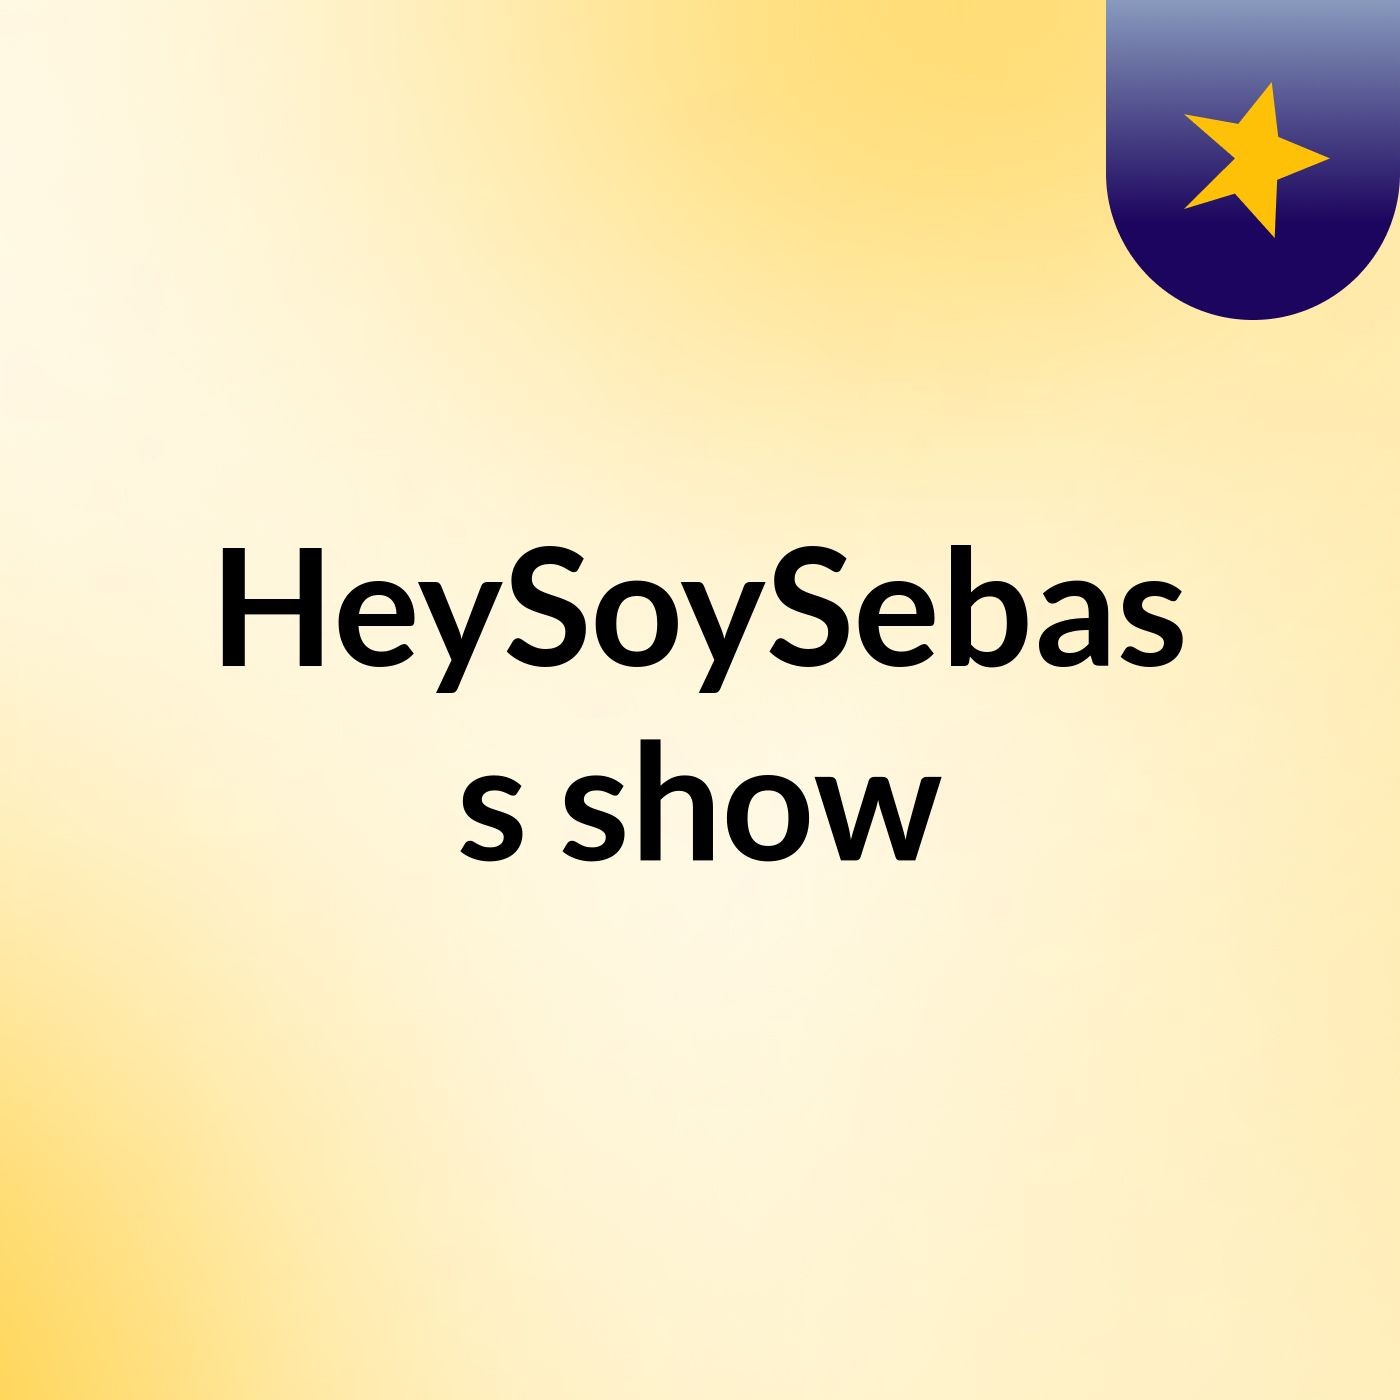 HeySoySebas's show